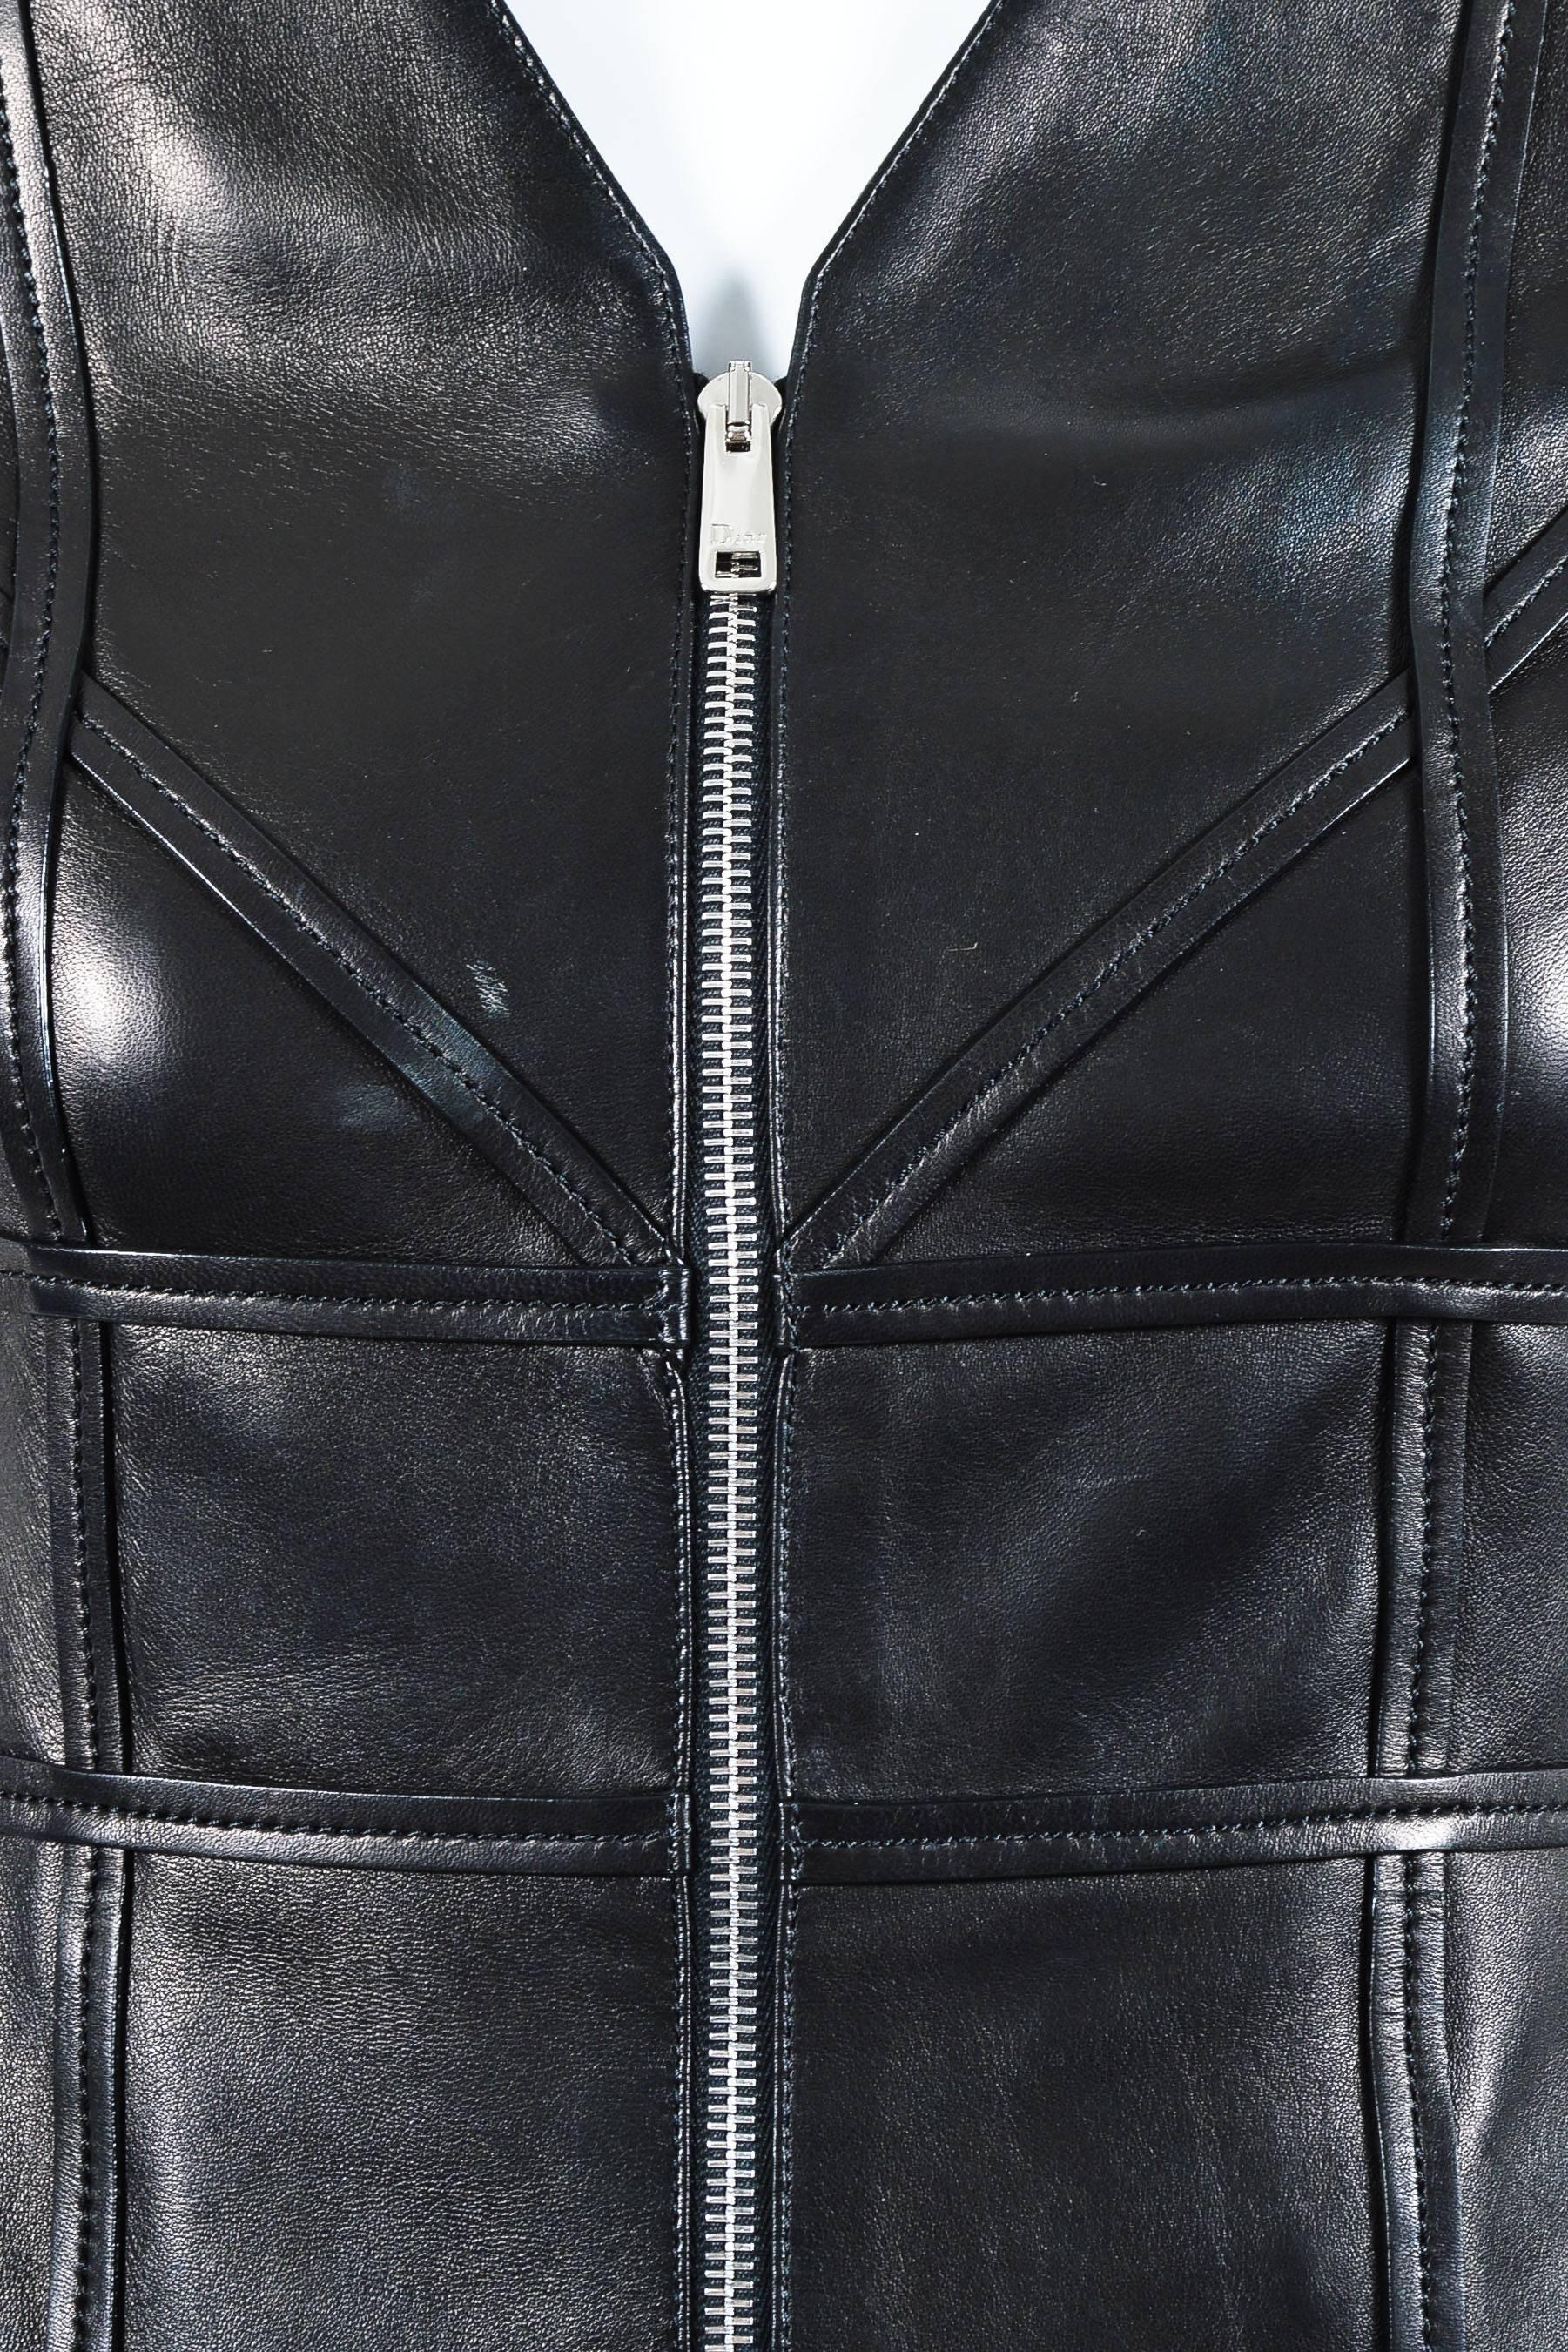 Women's Christian Dior Pre Fall 2016 Runway Black Leather Paneled Zip Up SS Dress SZ 6